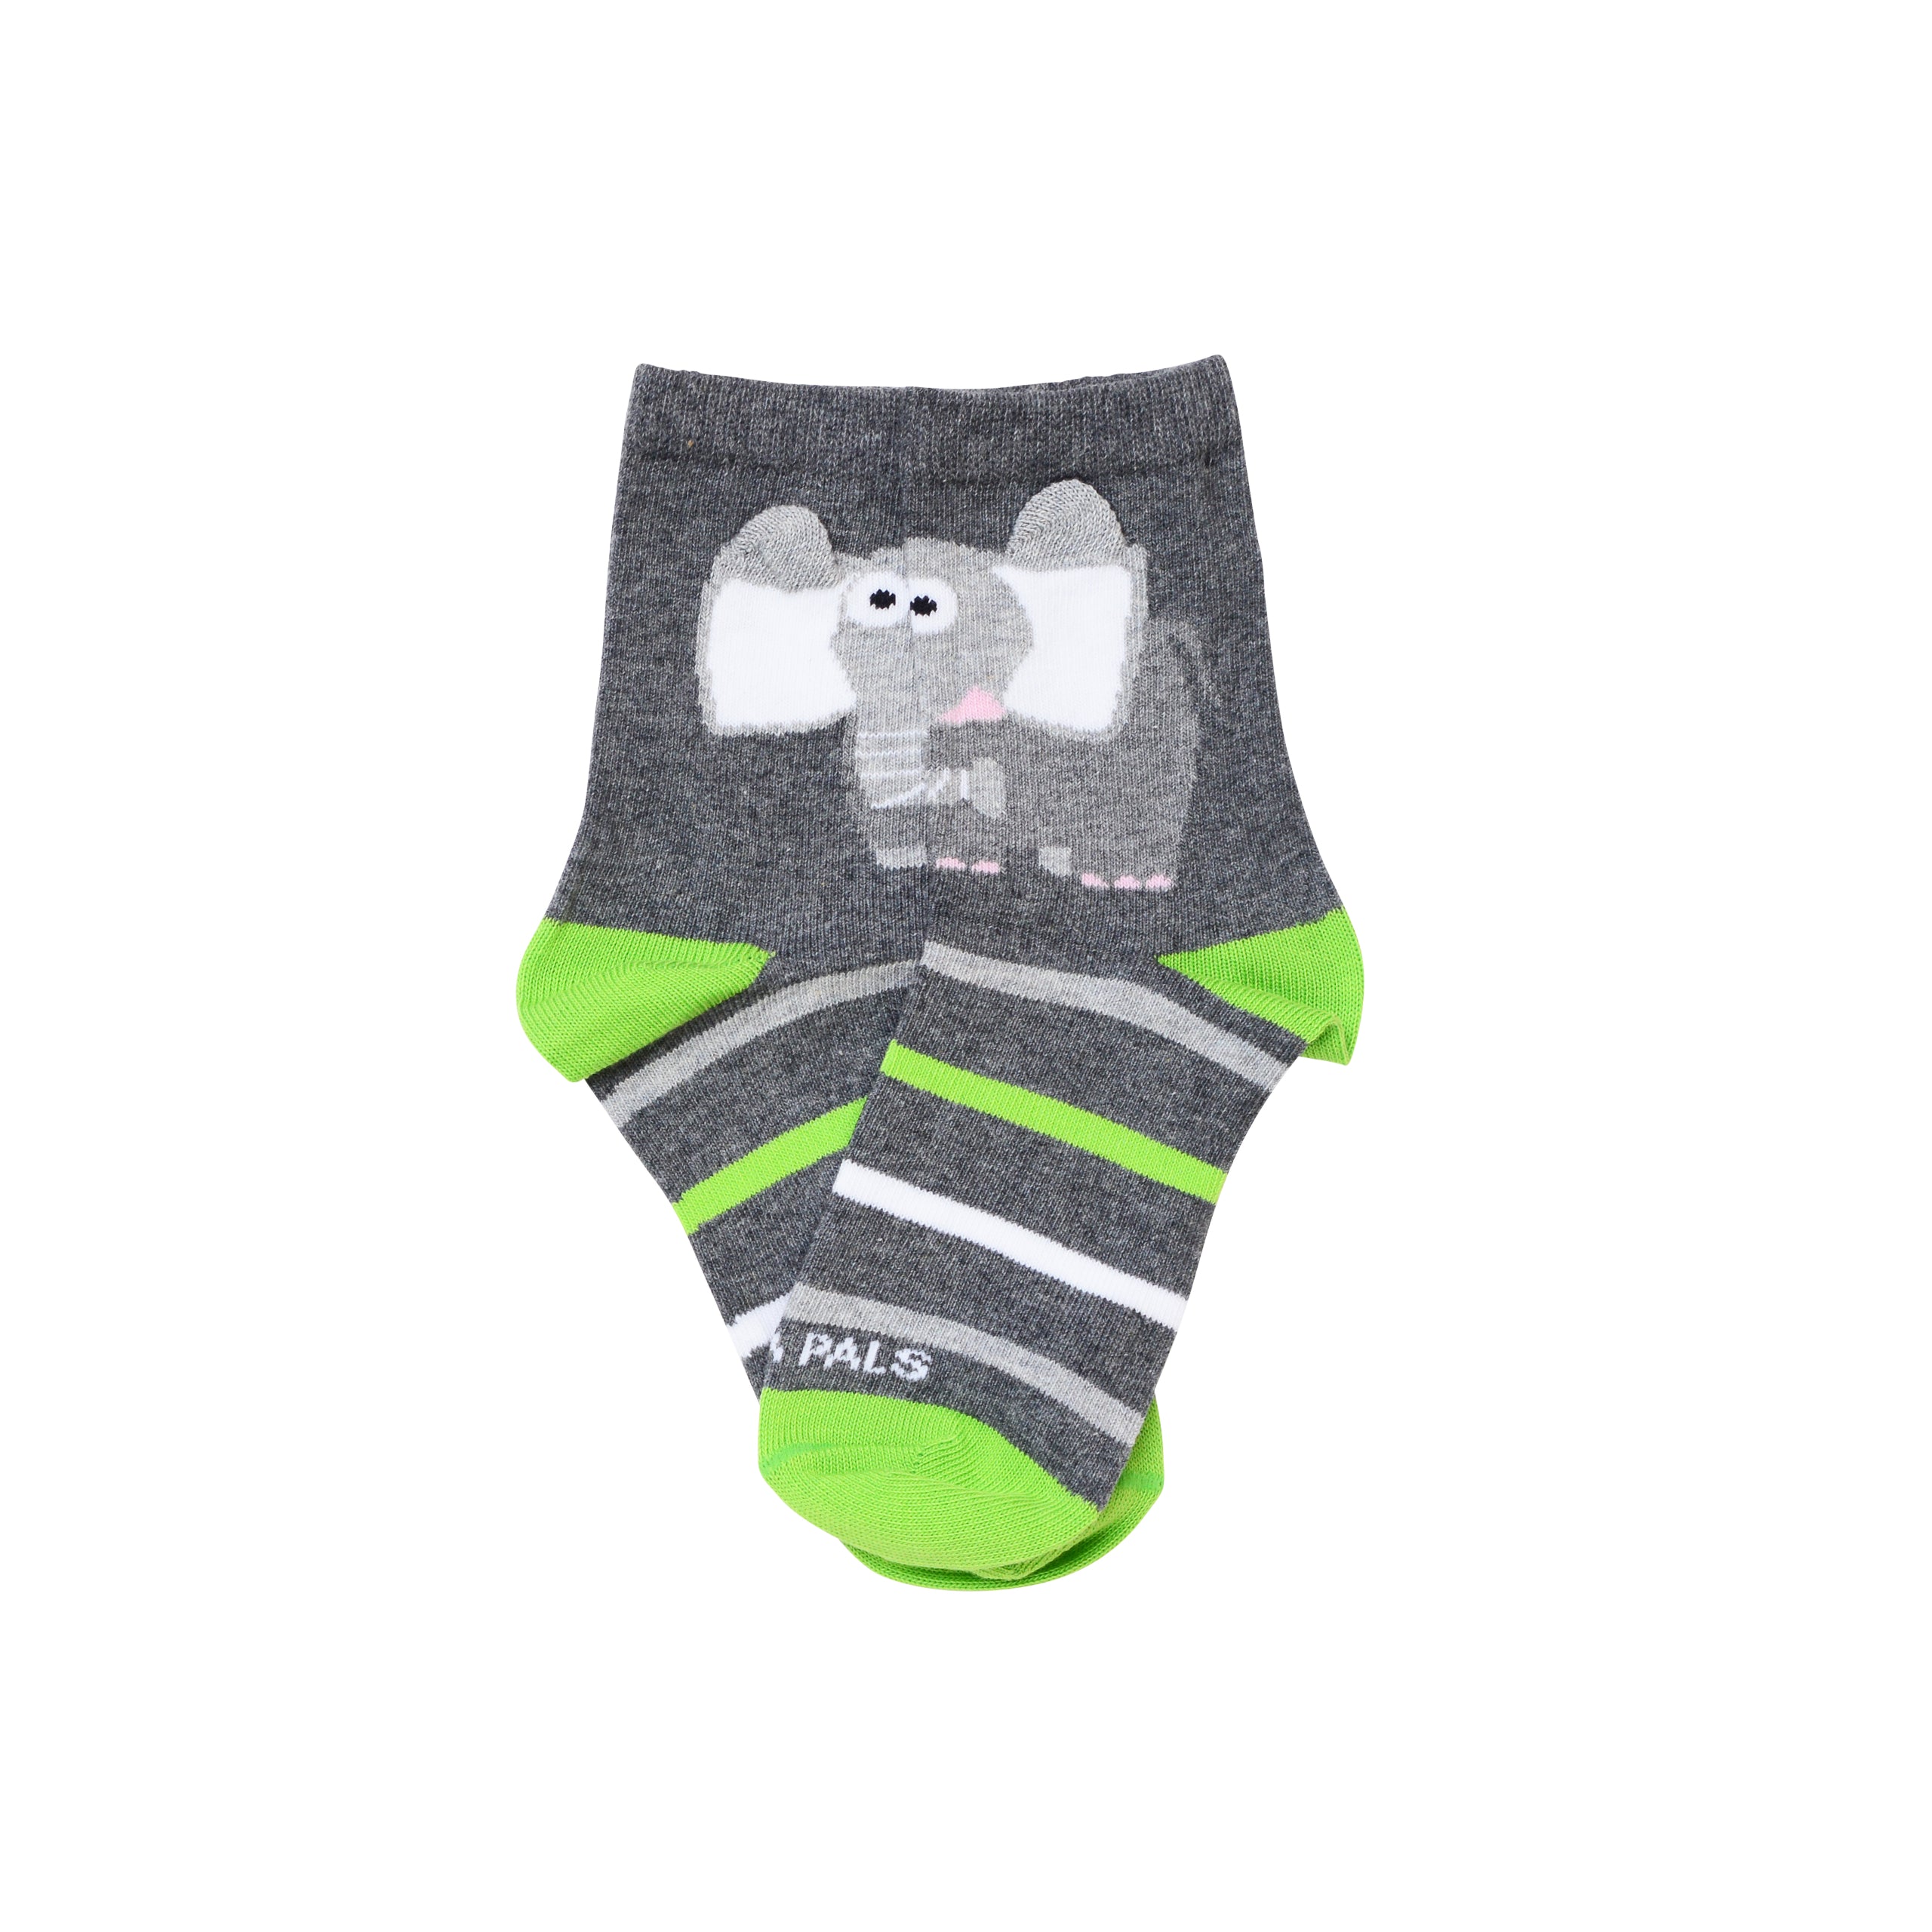 Elephant Socks from the Sock Panda (Ages 3-7)